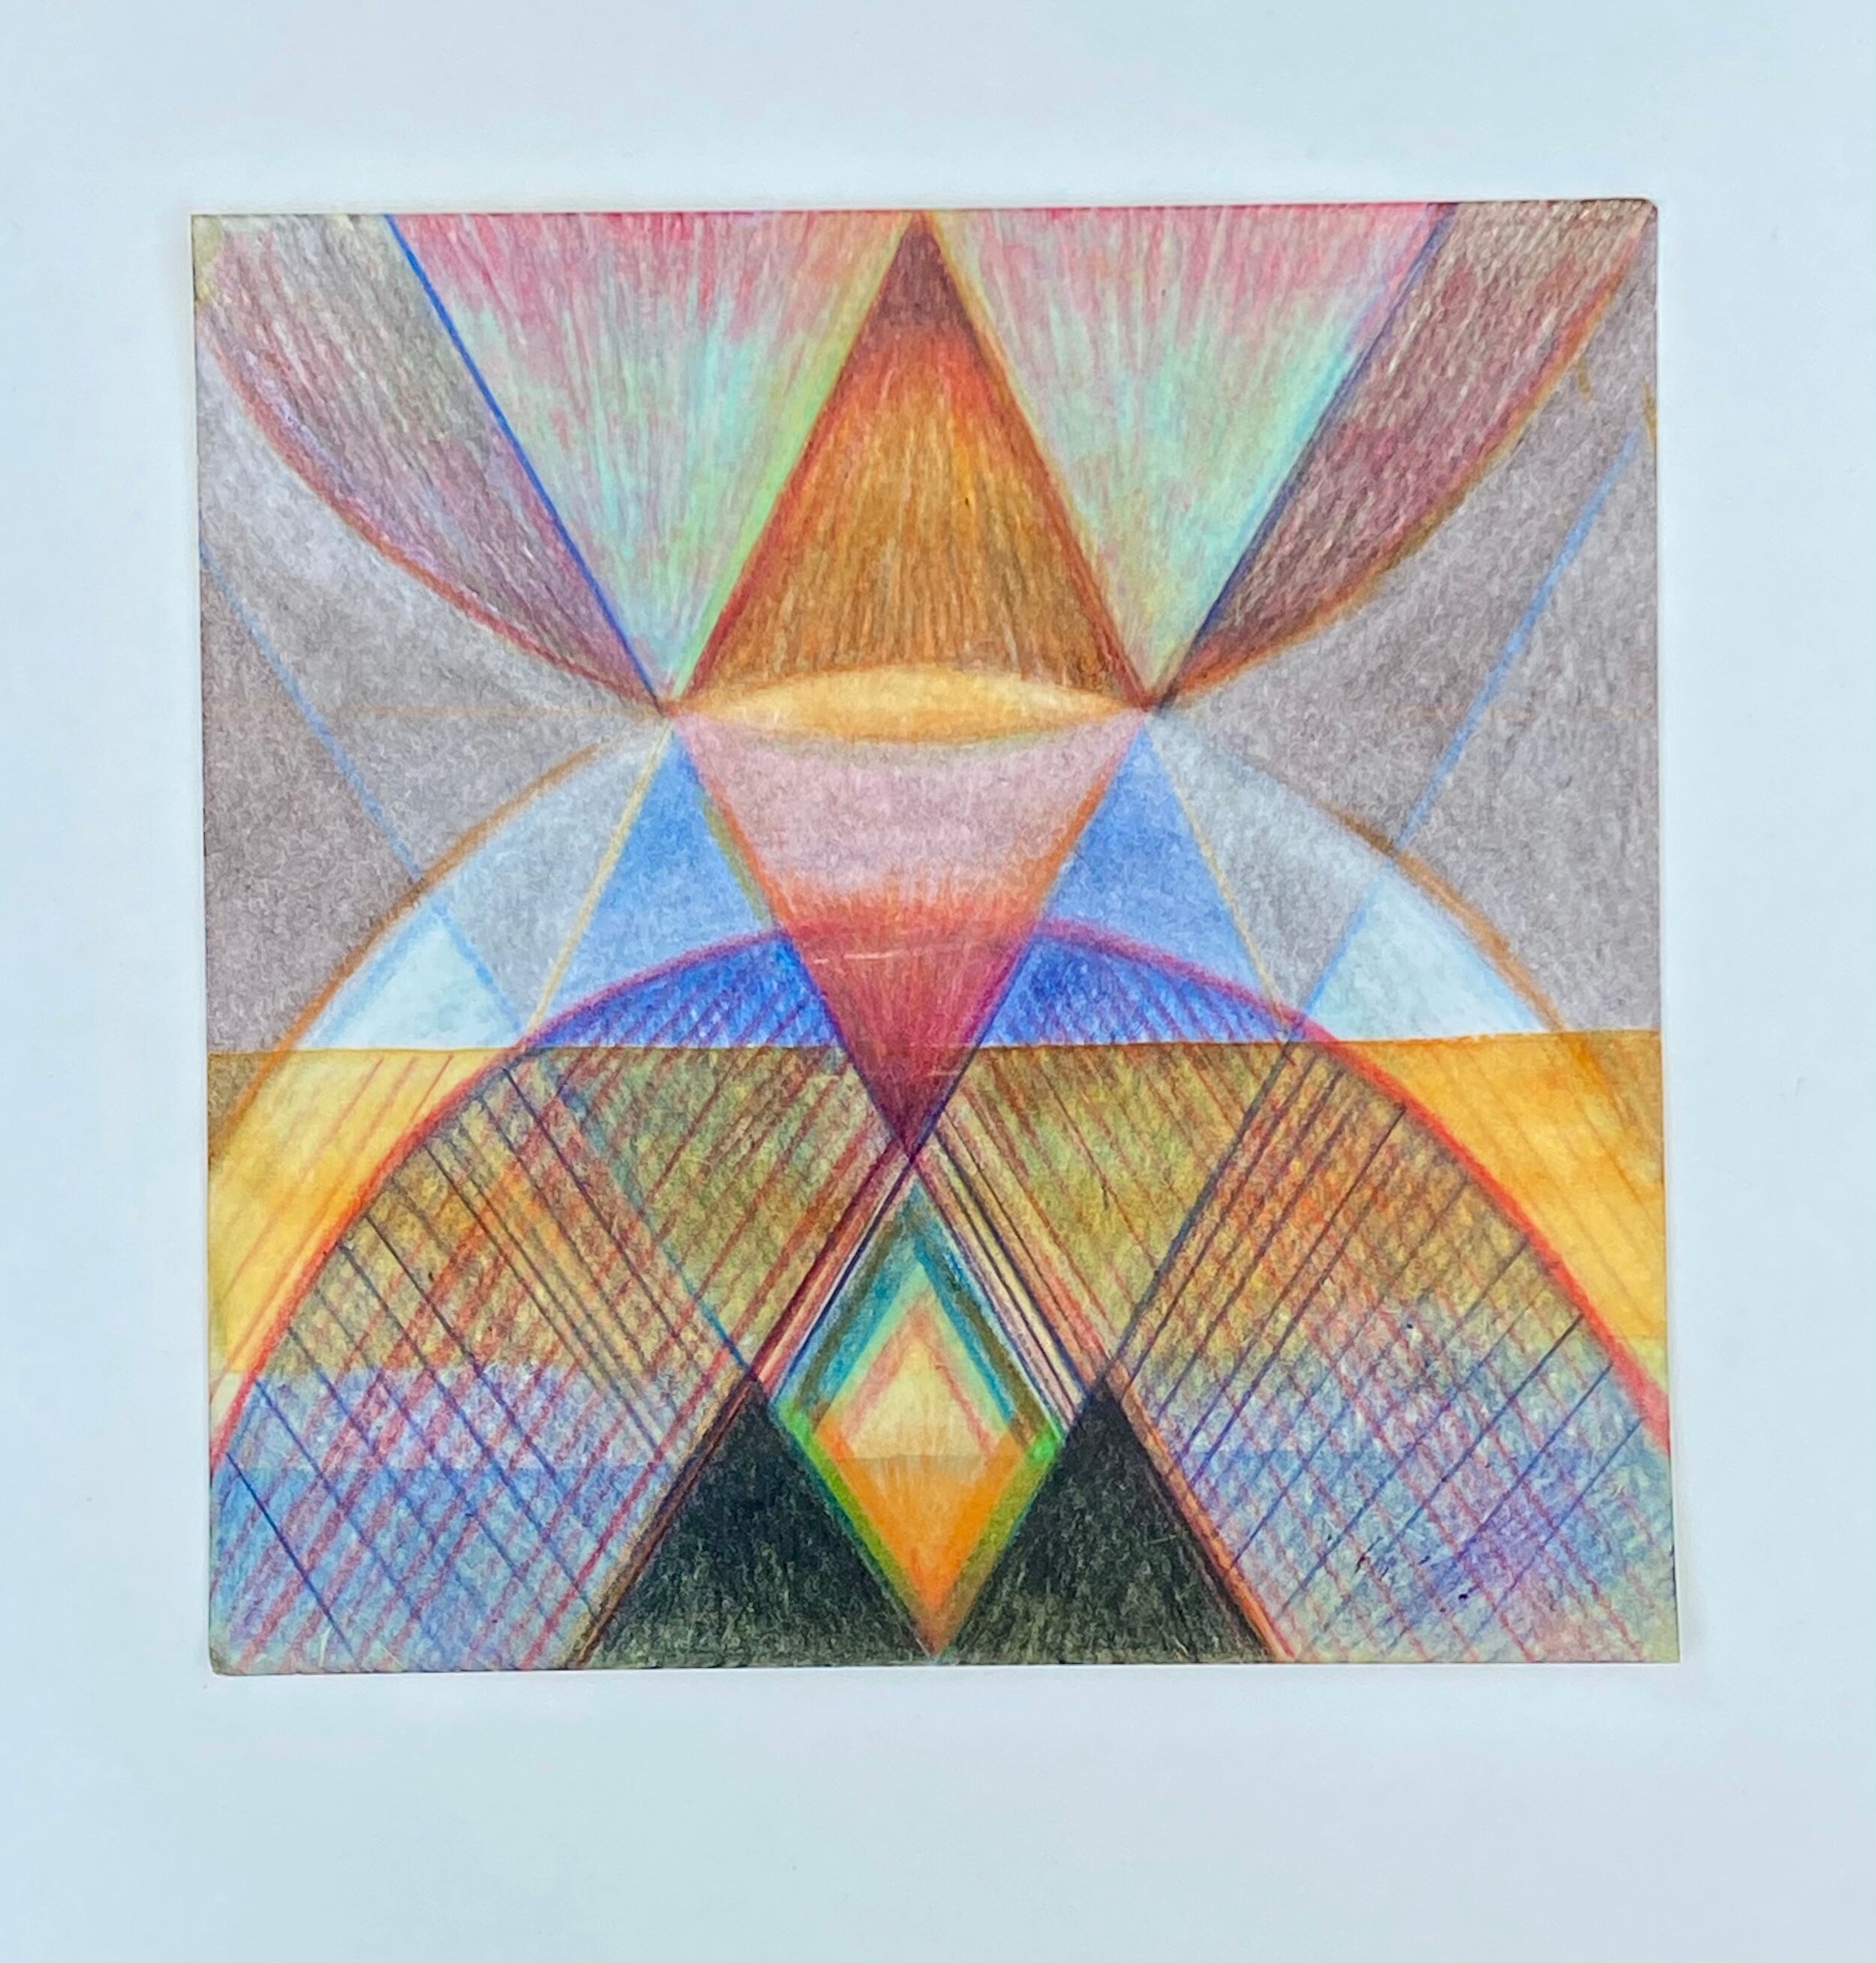 'Hilma', colored pencil on paper, 6" x 6", 2020